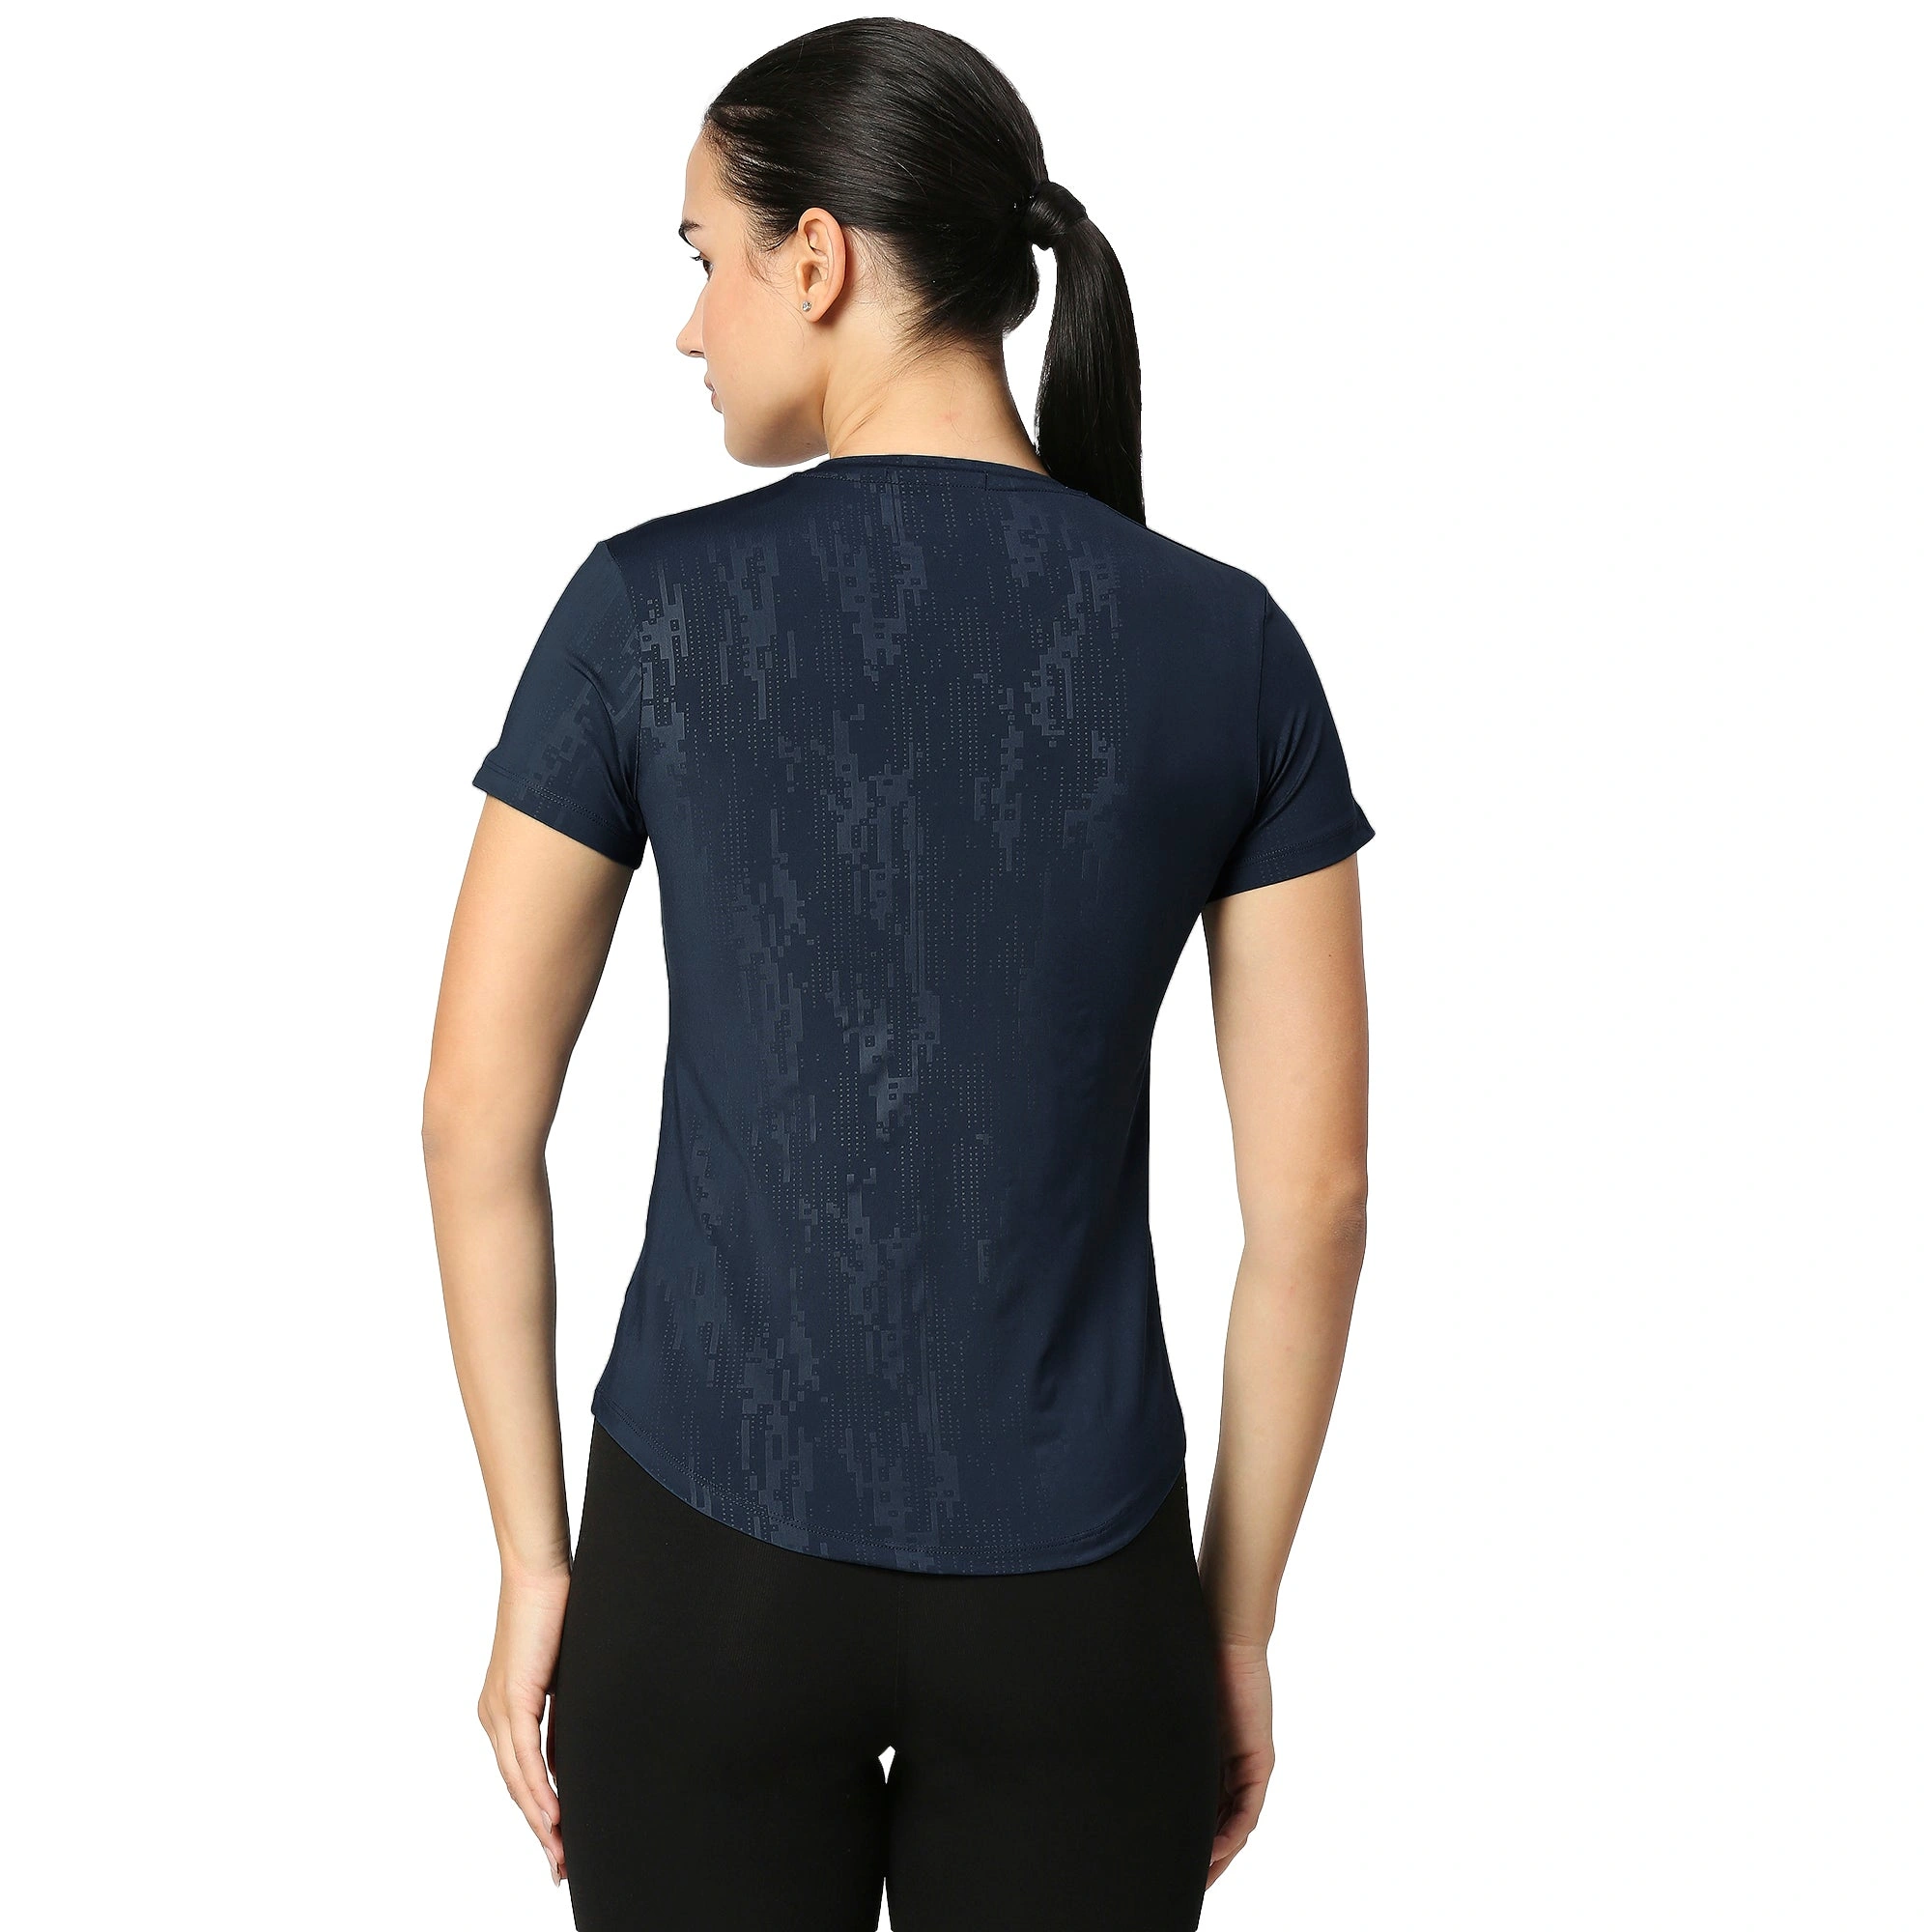 Curved Hem Emboss Print Gym Workout T-Shirt -NAVY BLUE-S-3